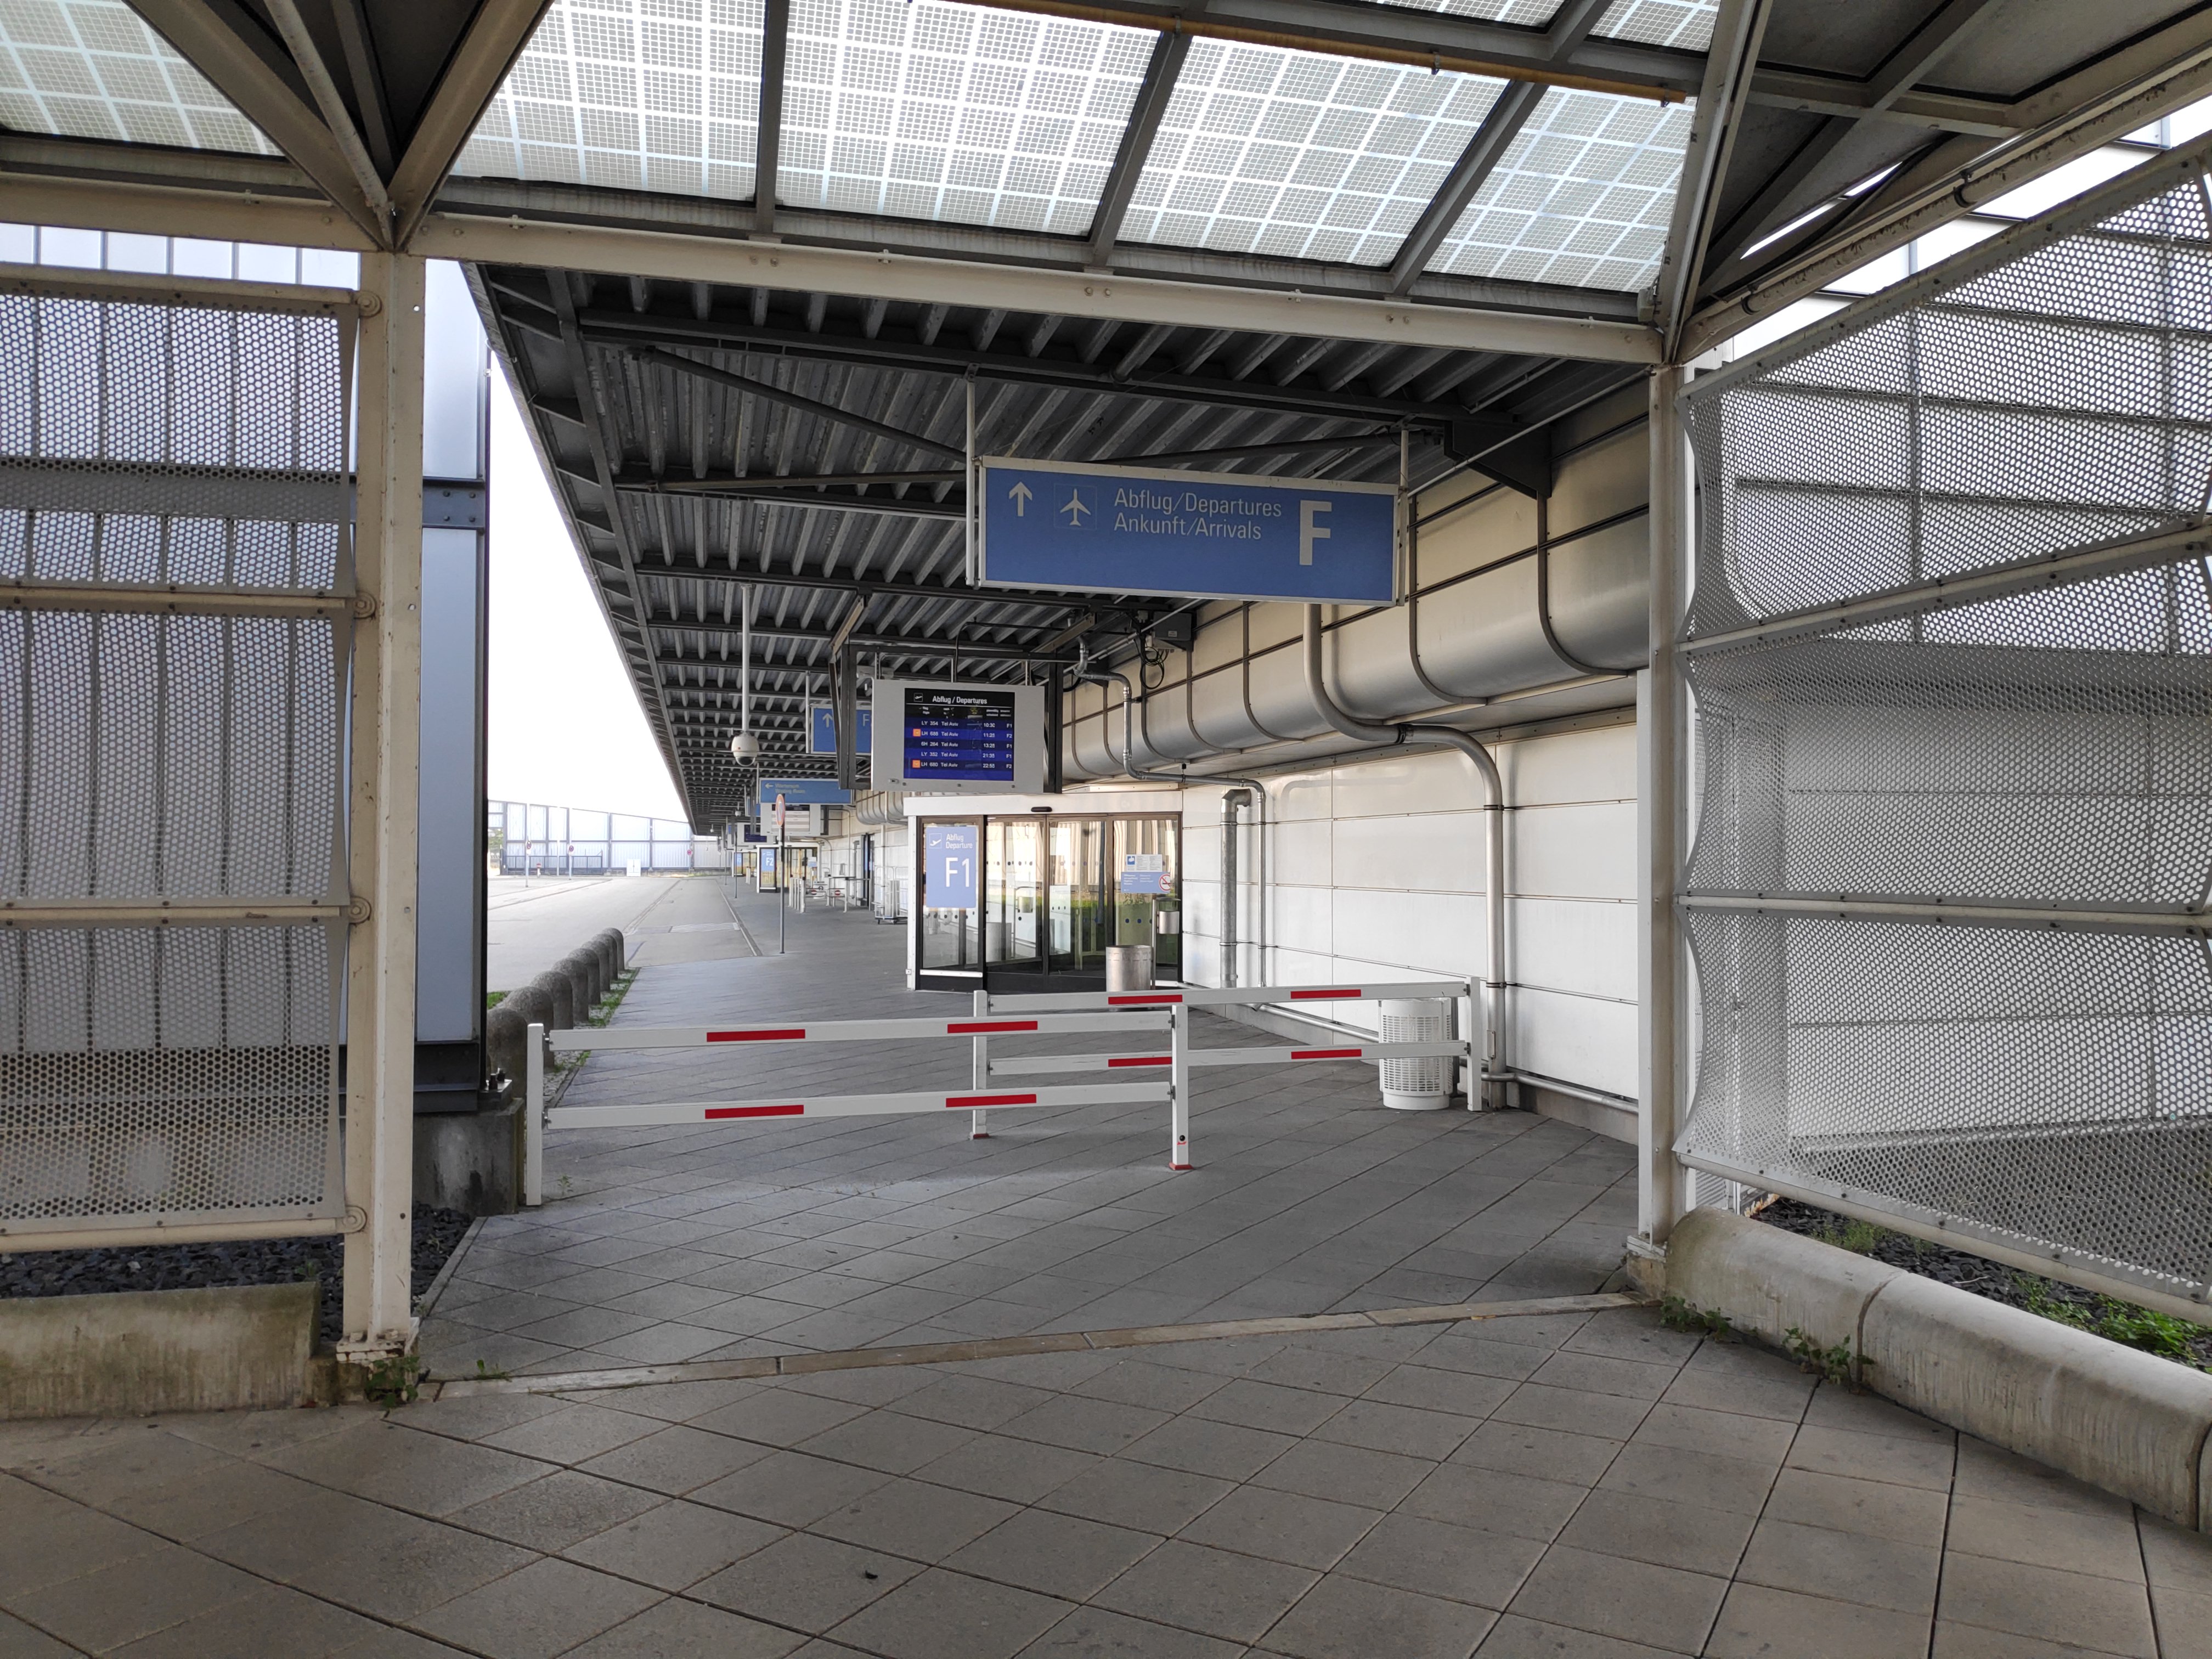 A Look At MUC, Munich International Airport 